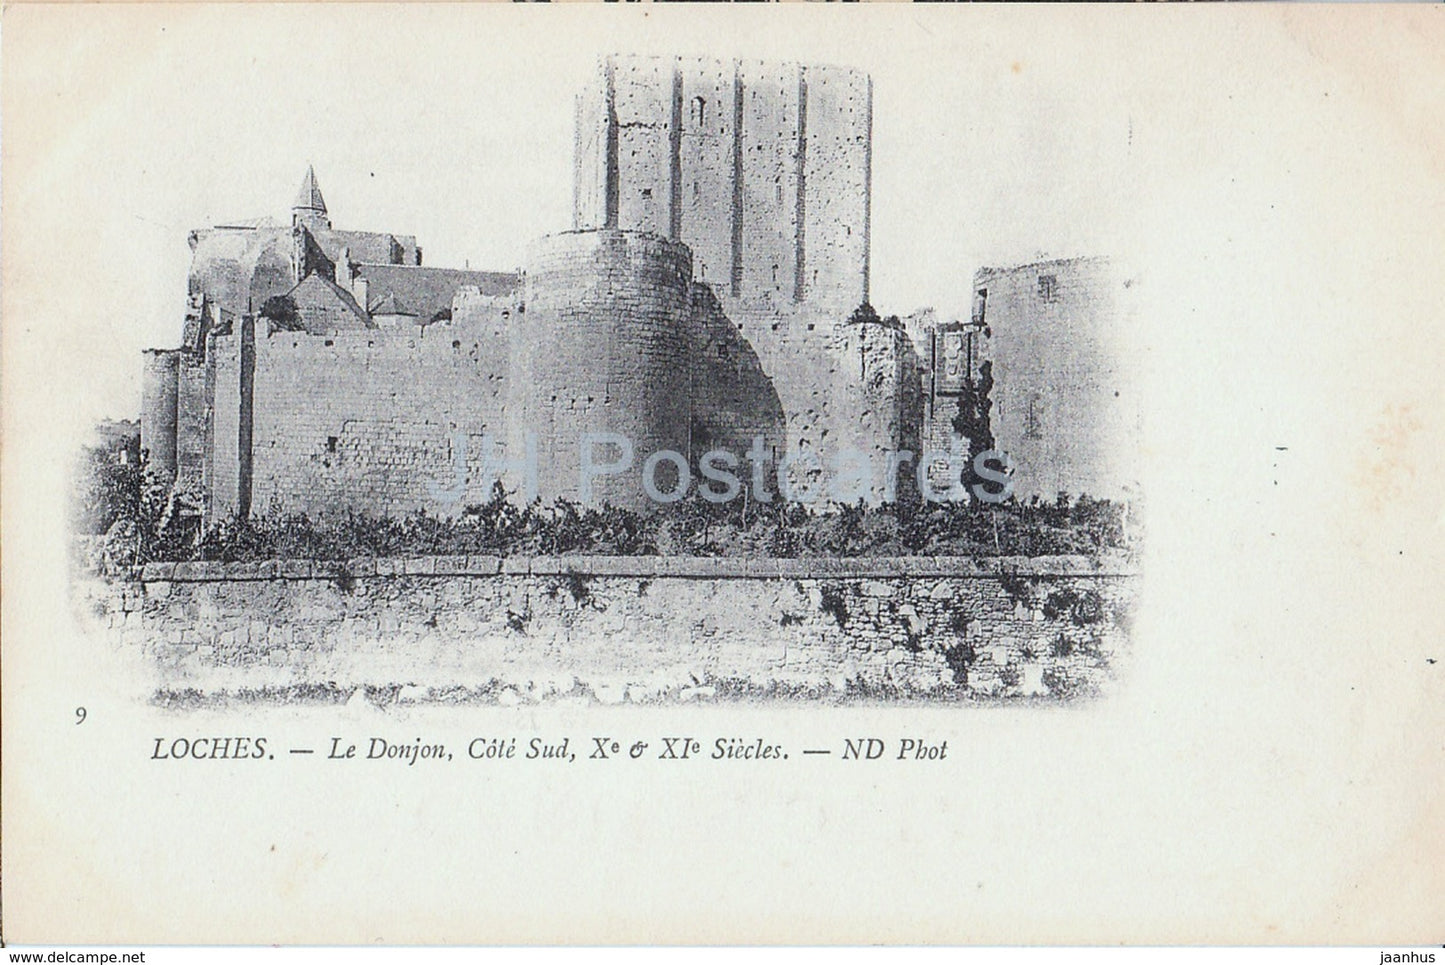 Loches - Le Donjon - Cote Sud - 9 - castle - old postcard - France - unused